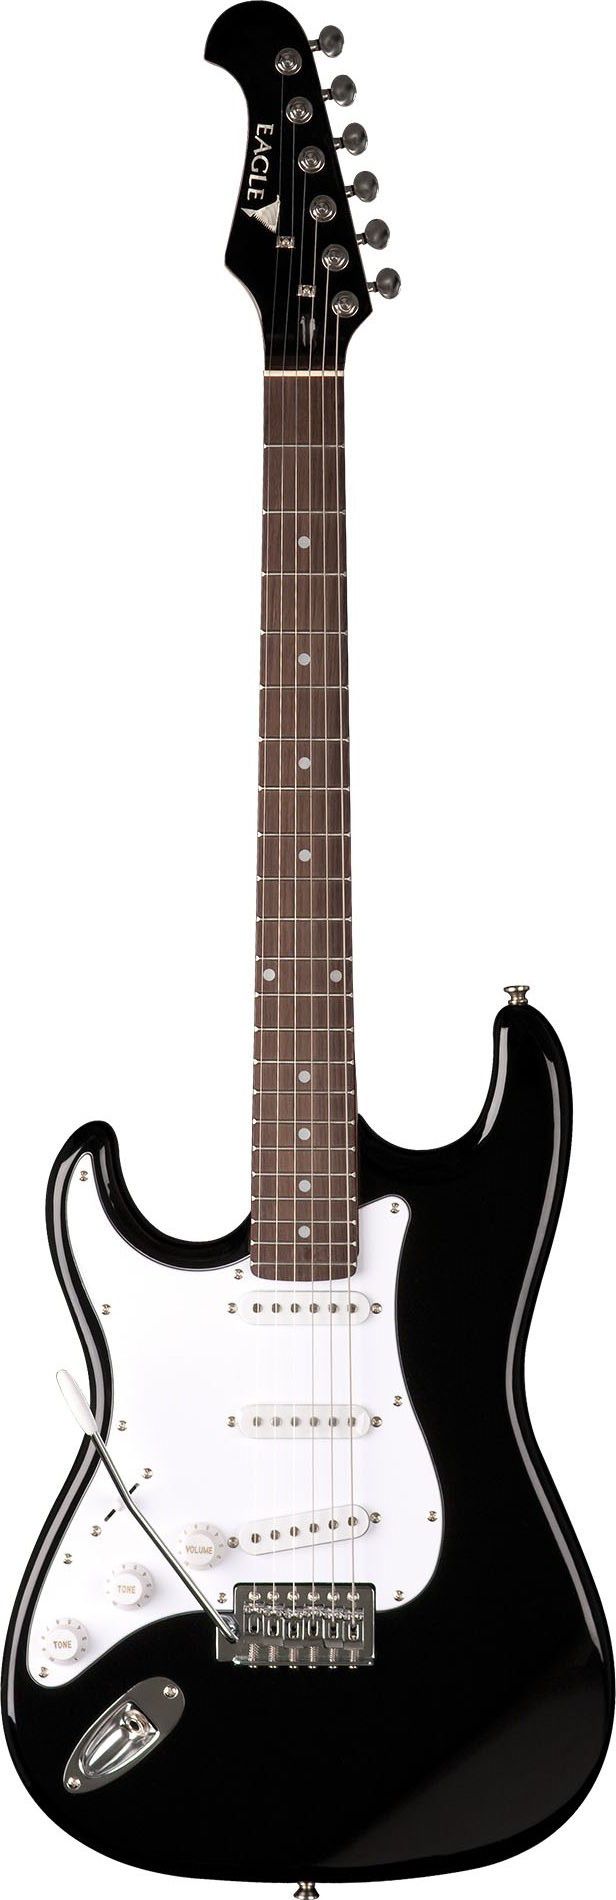 Guitarra Eagle STS001 Stratocaster Preta